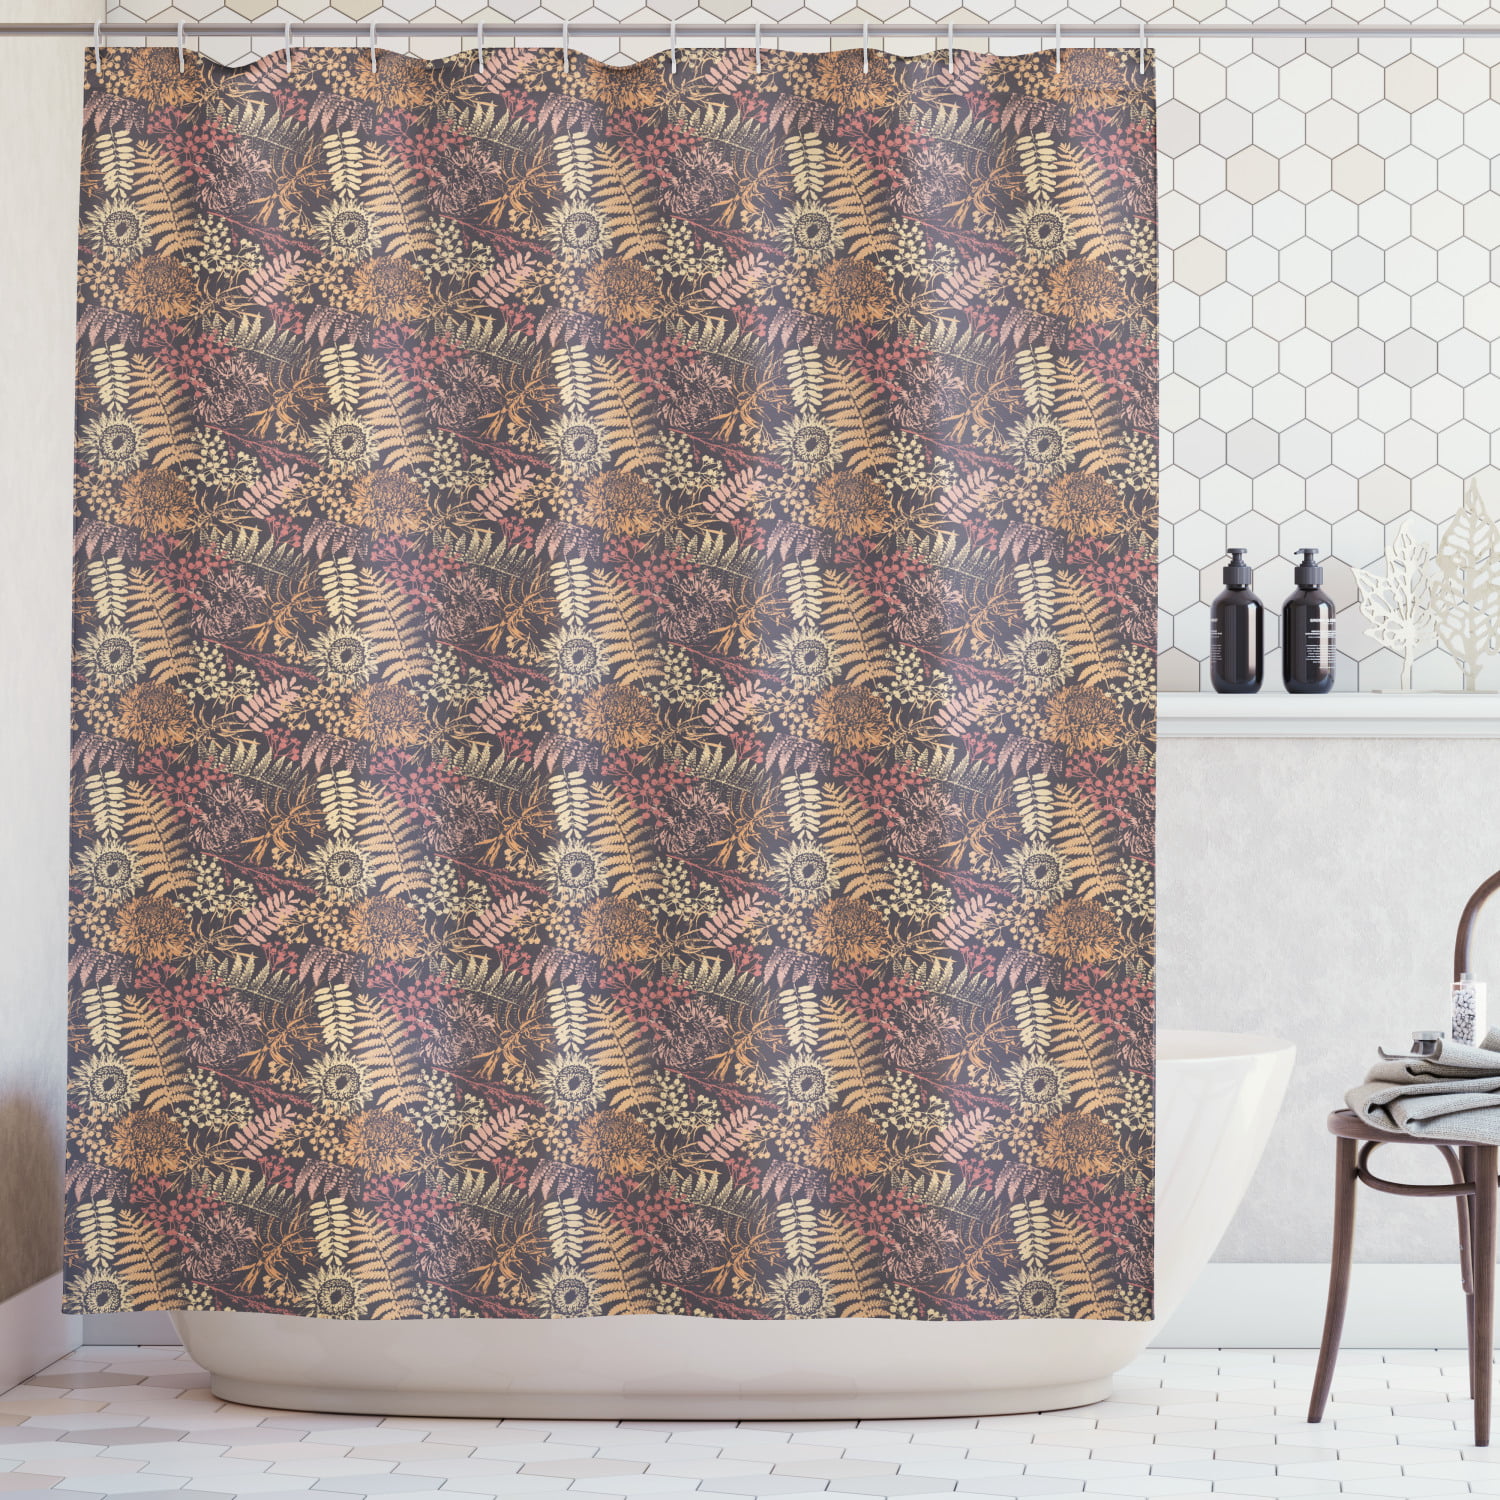 Grunge Pattern Shower Curtain Fabric Decor Set with Hooks 4 Sizes Ambesonne 